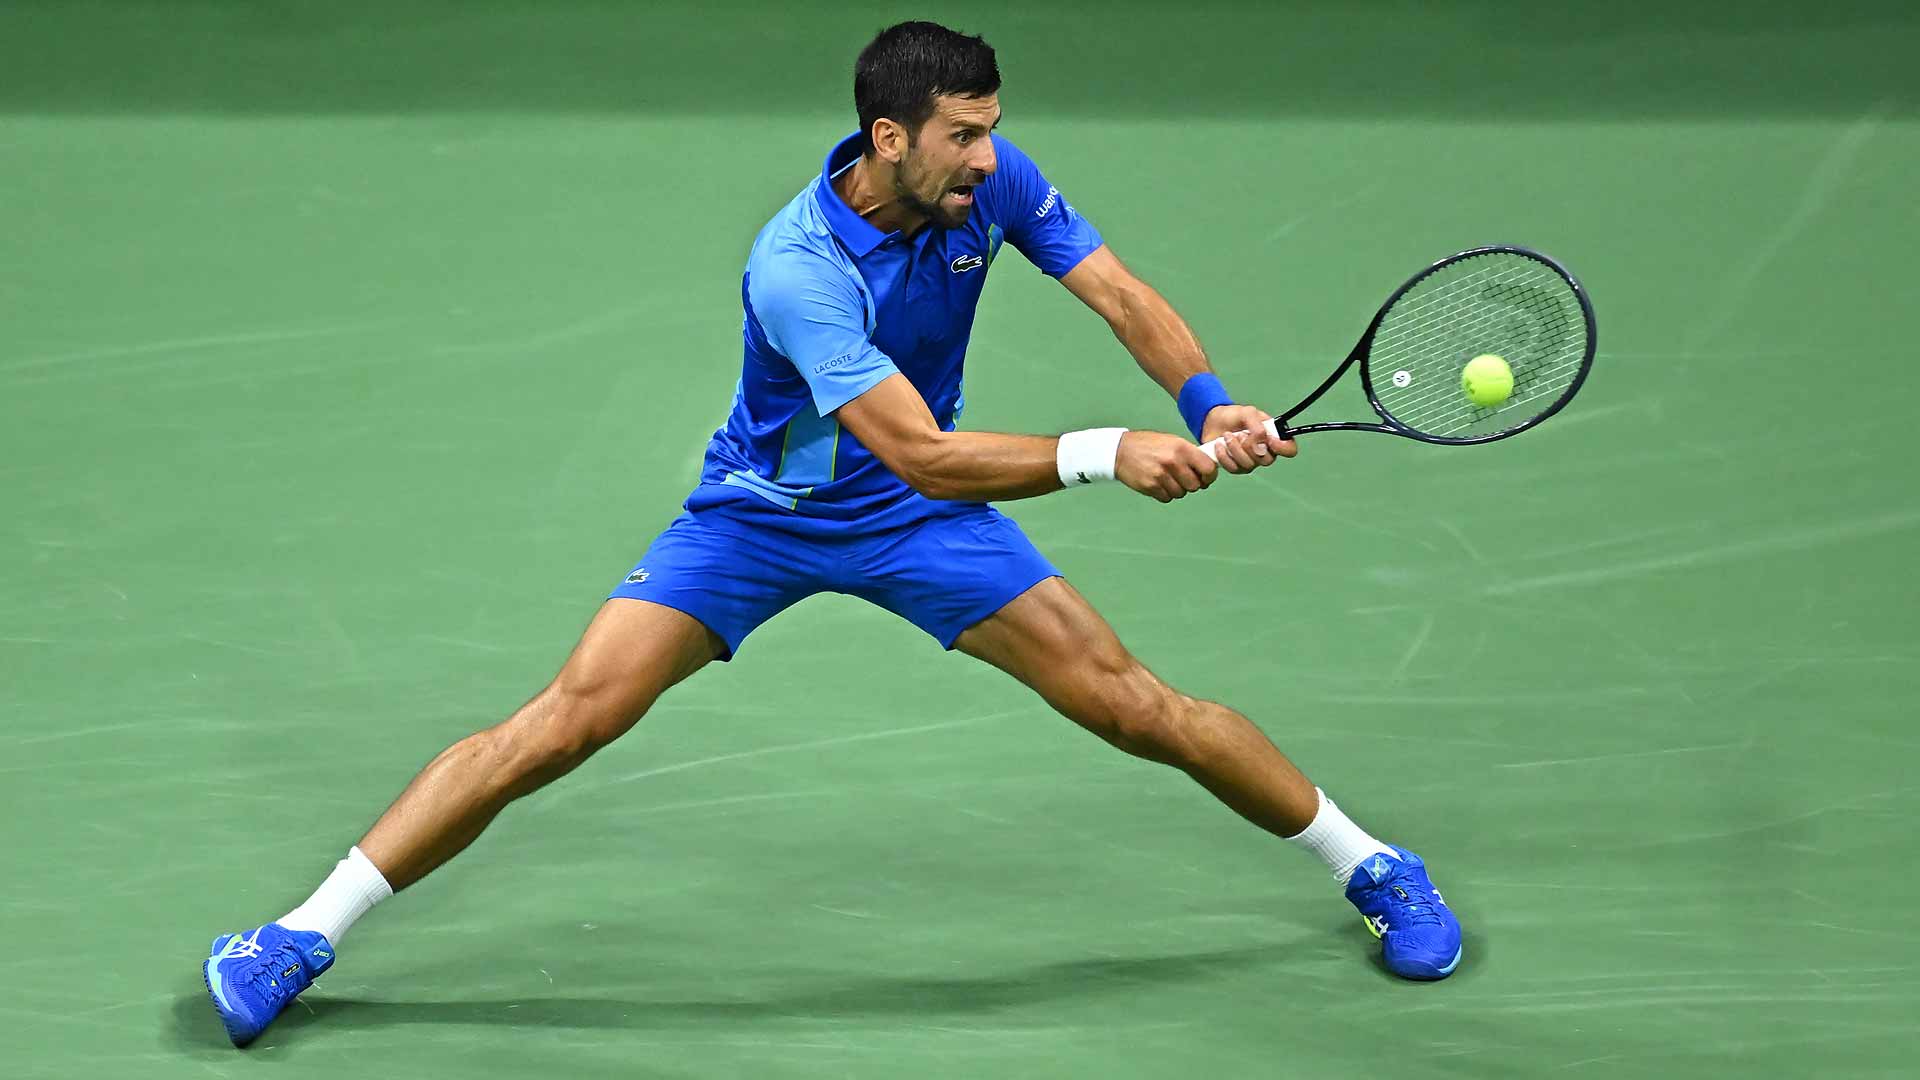 Djokovic breaks record for most consecutive Grand Slam tiebreaks